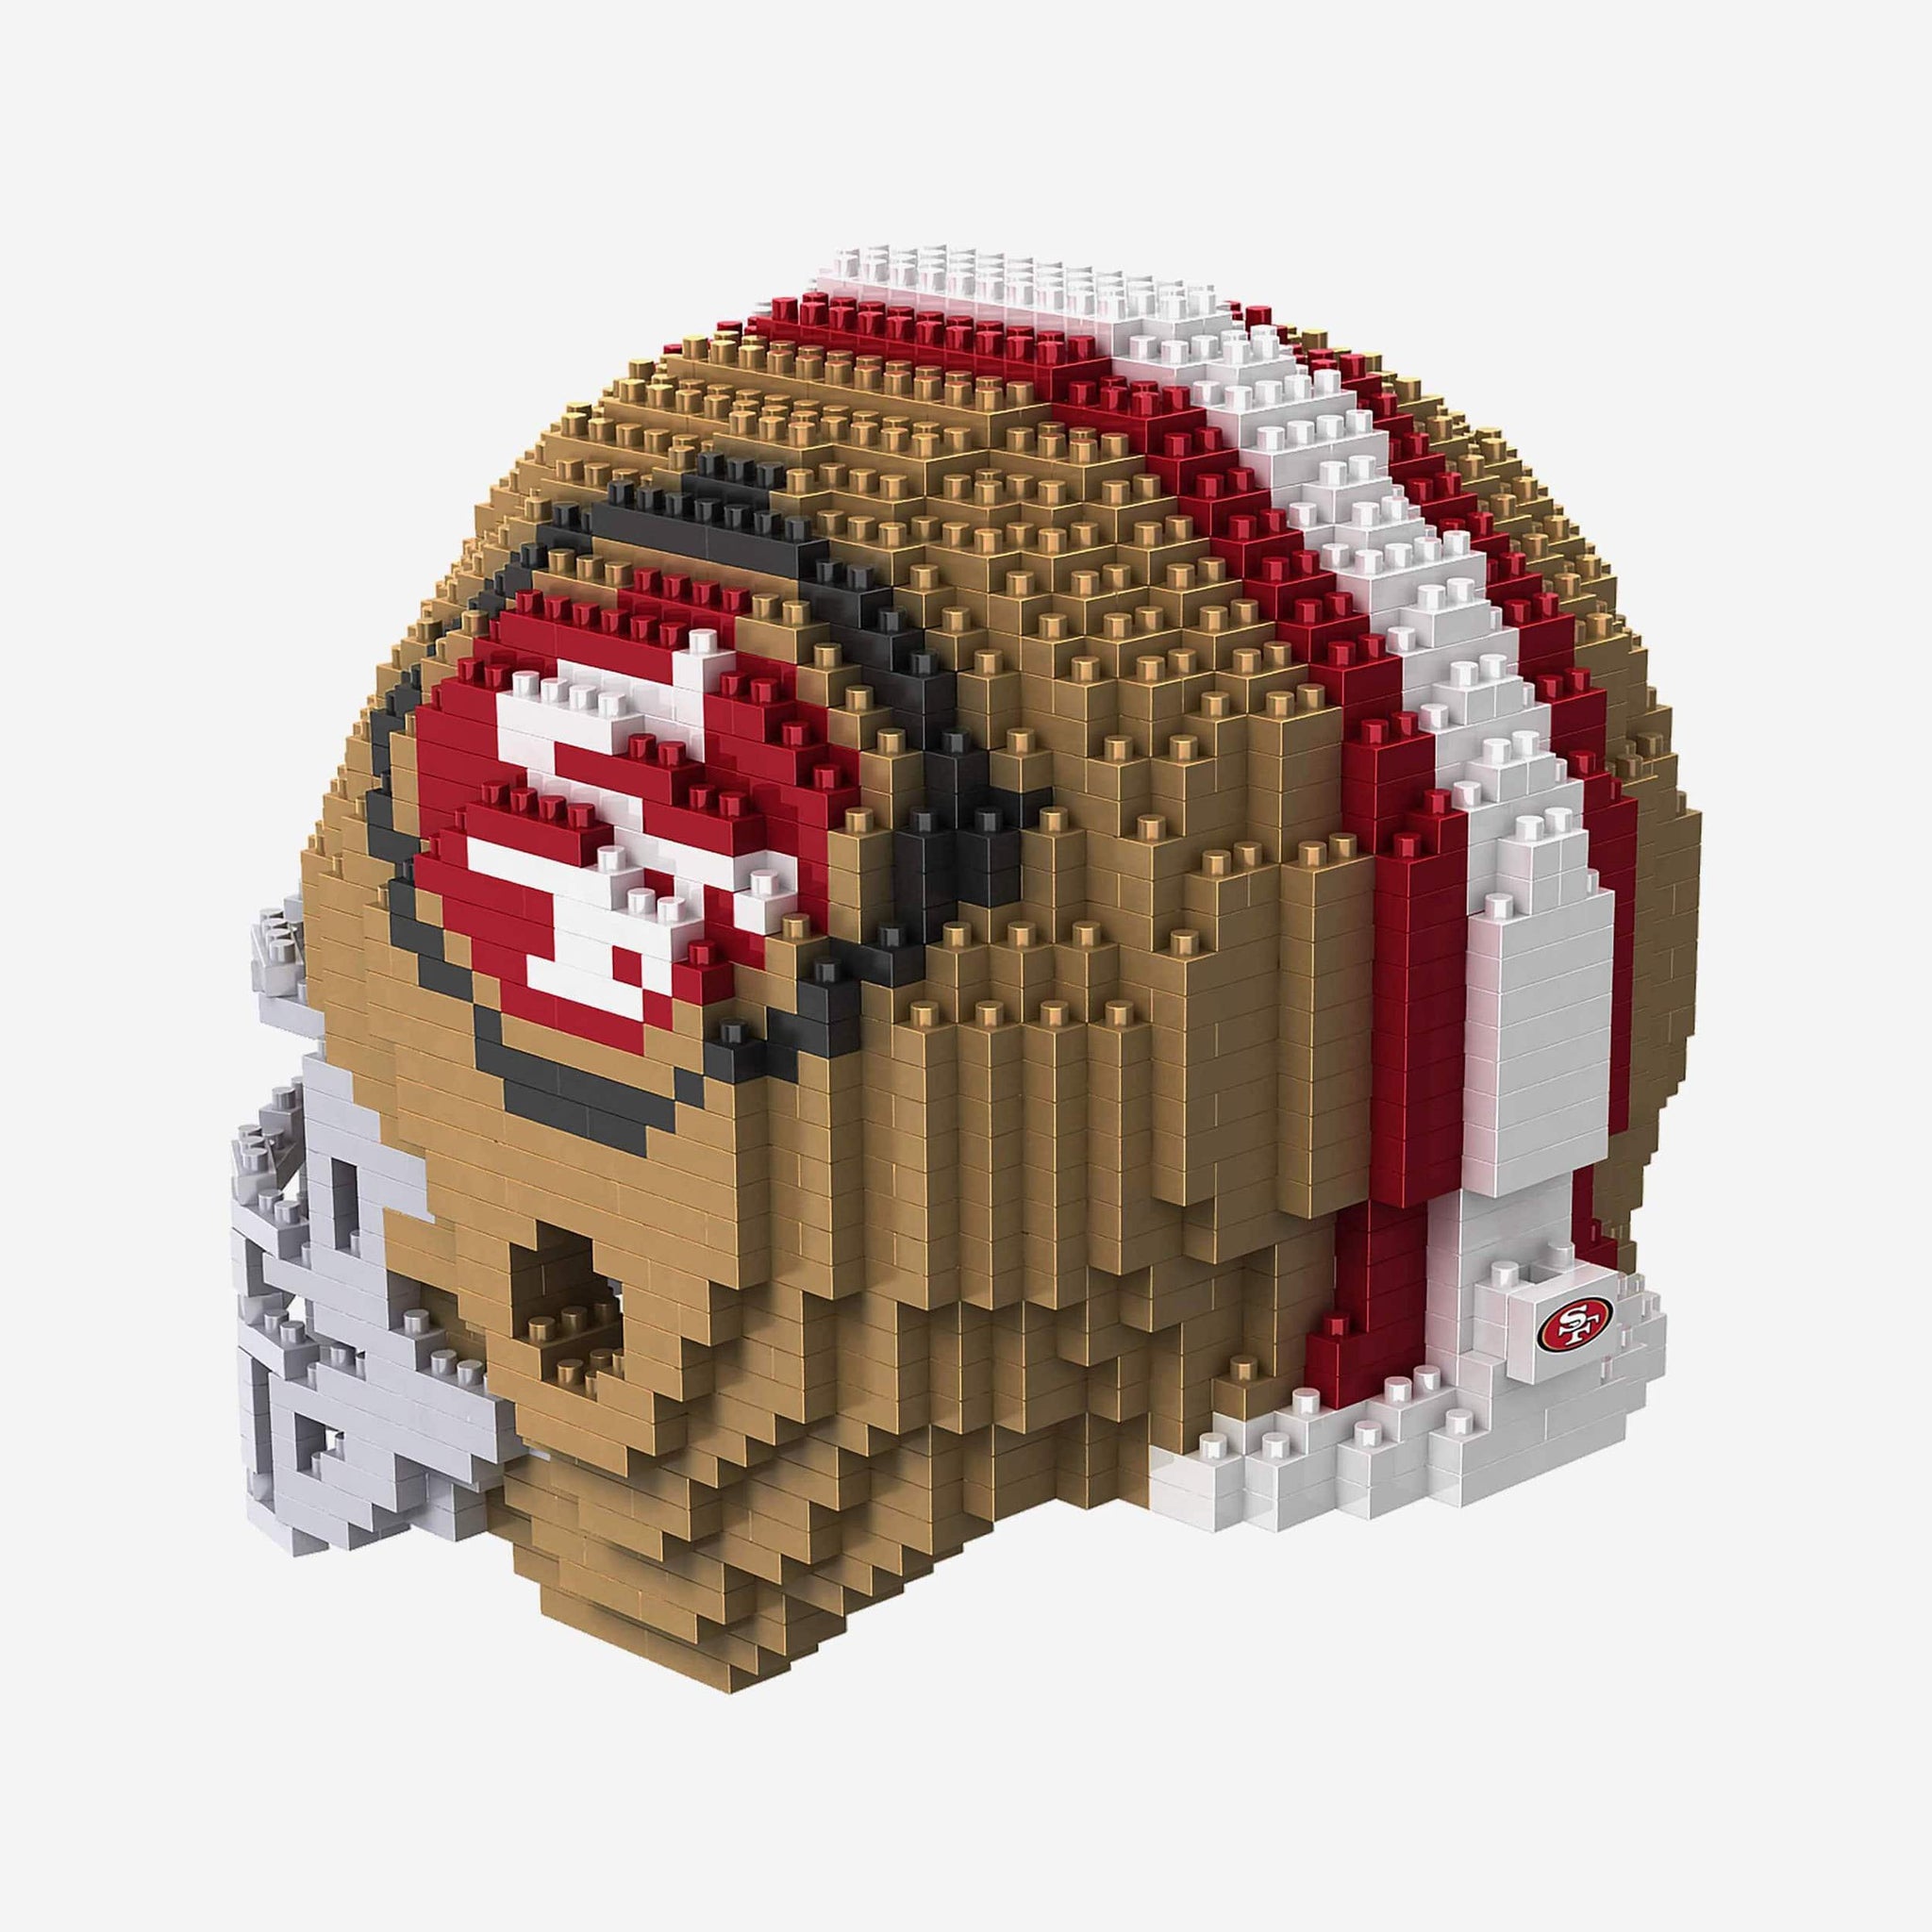 49ers lego helmet